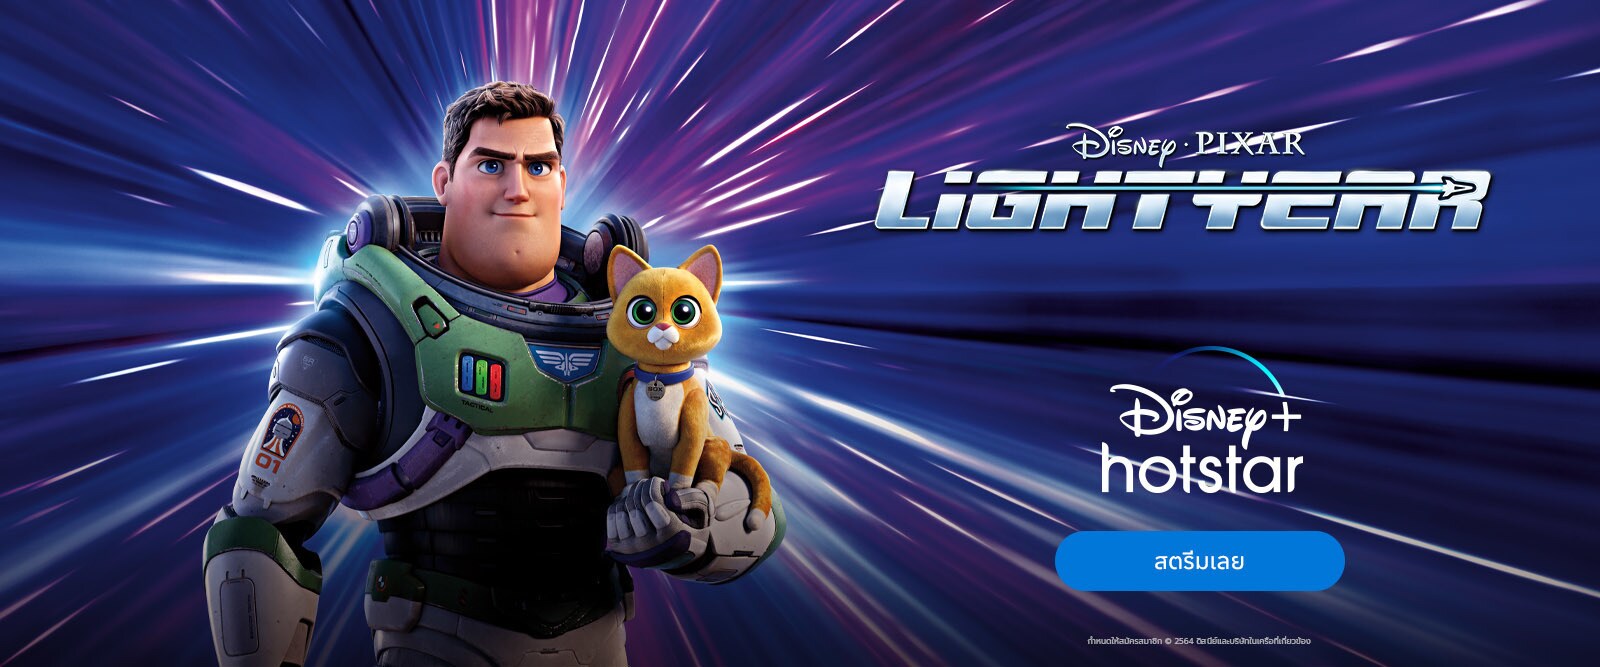 Disney+ Hotstar Lightyear | Homepage Hero